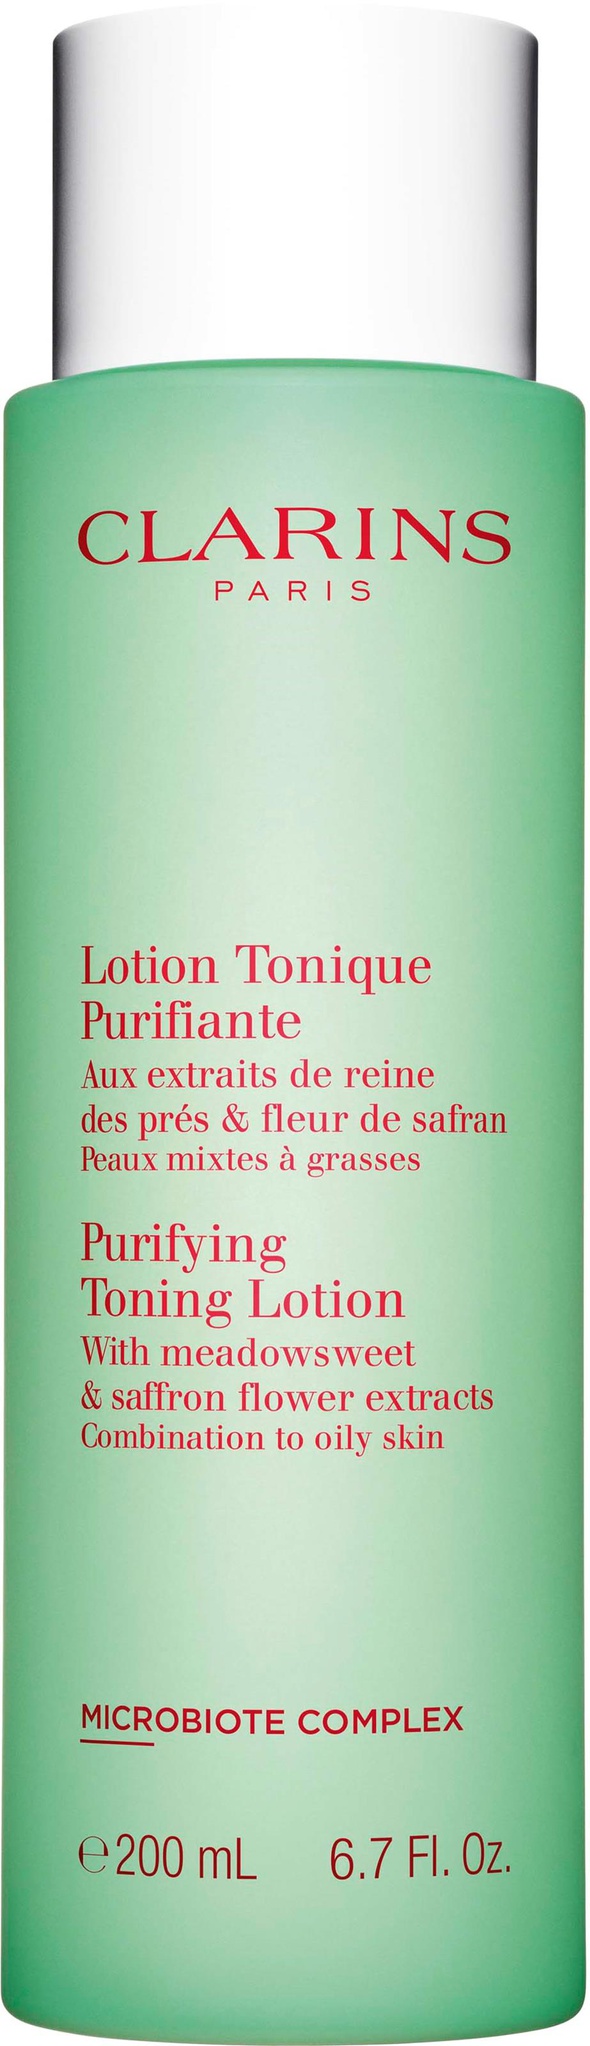 Toning lotion